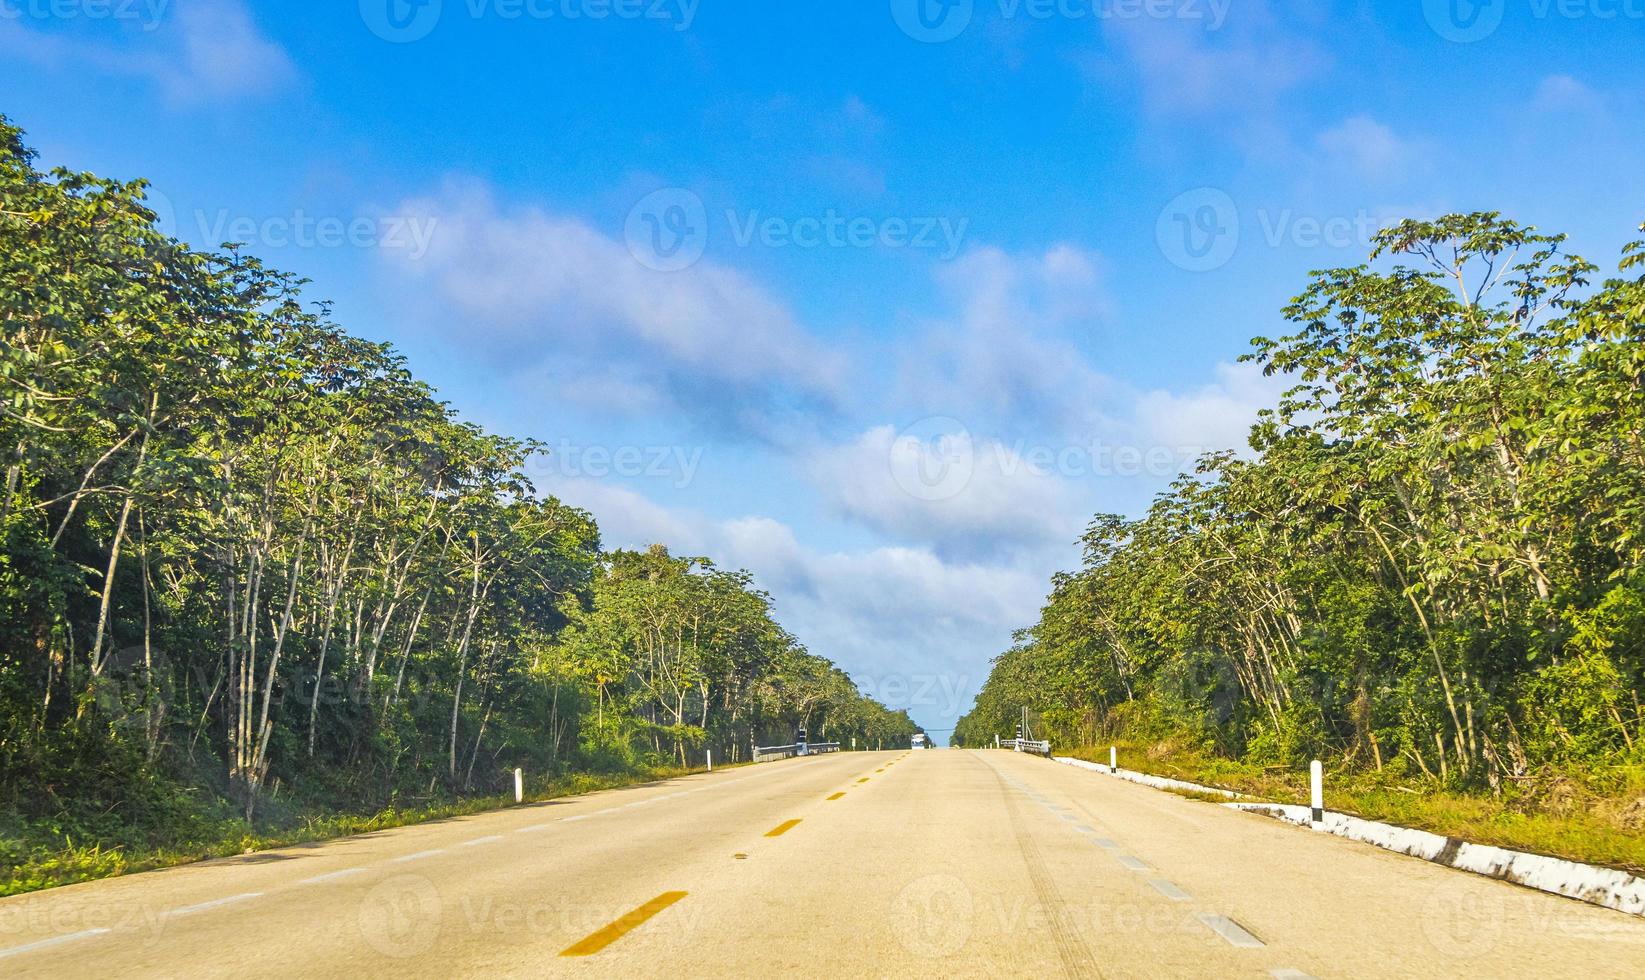 conduciendo por la autopista autopista en la naturaleza tropical de la selva méxico. foto